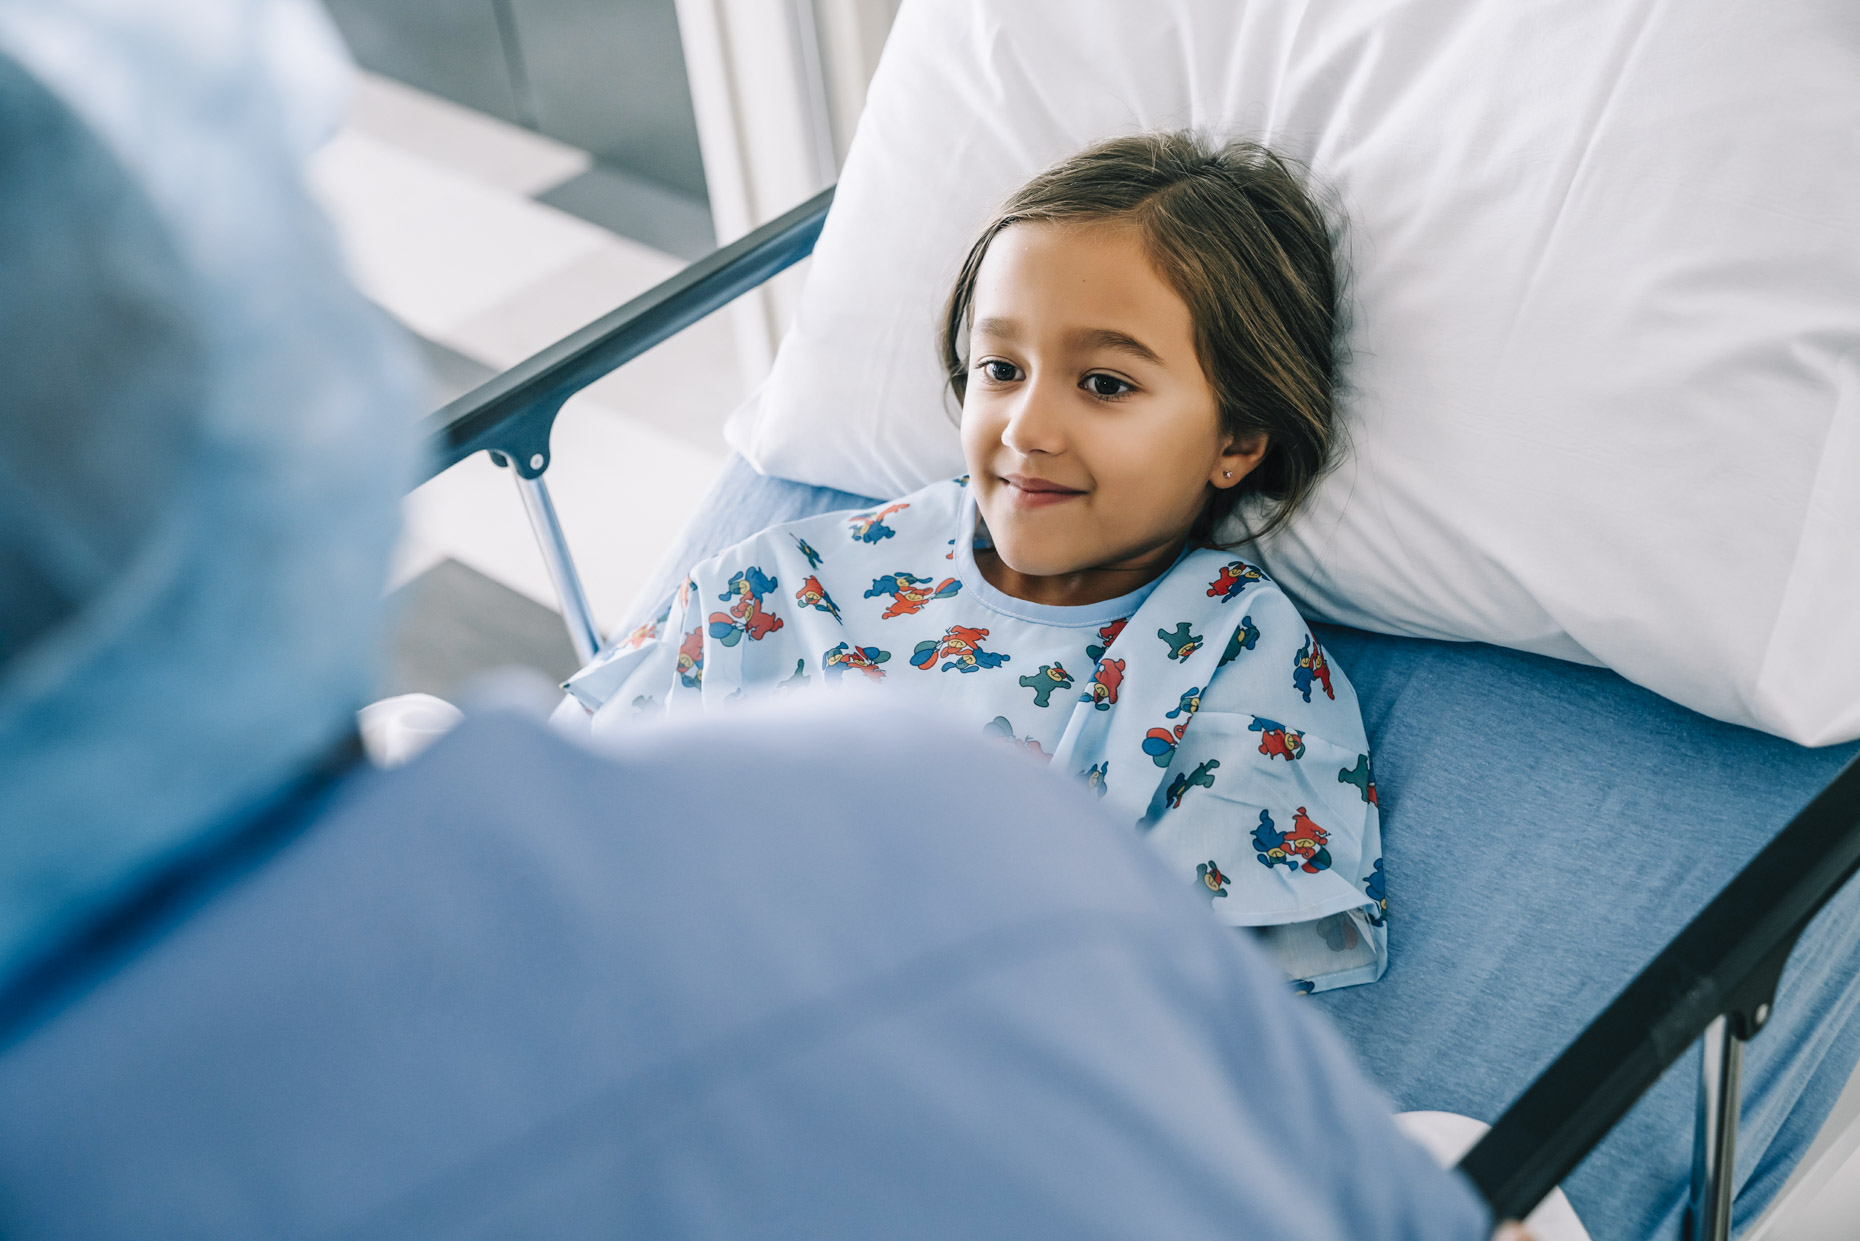 Hispanic girl in hospital bed smiling nervously at nurse